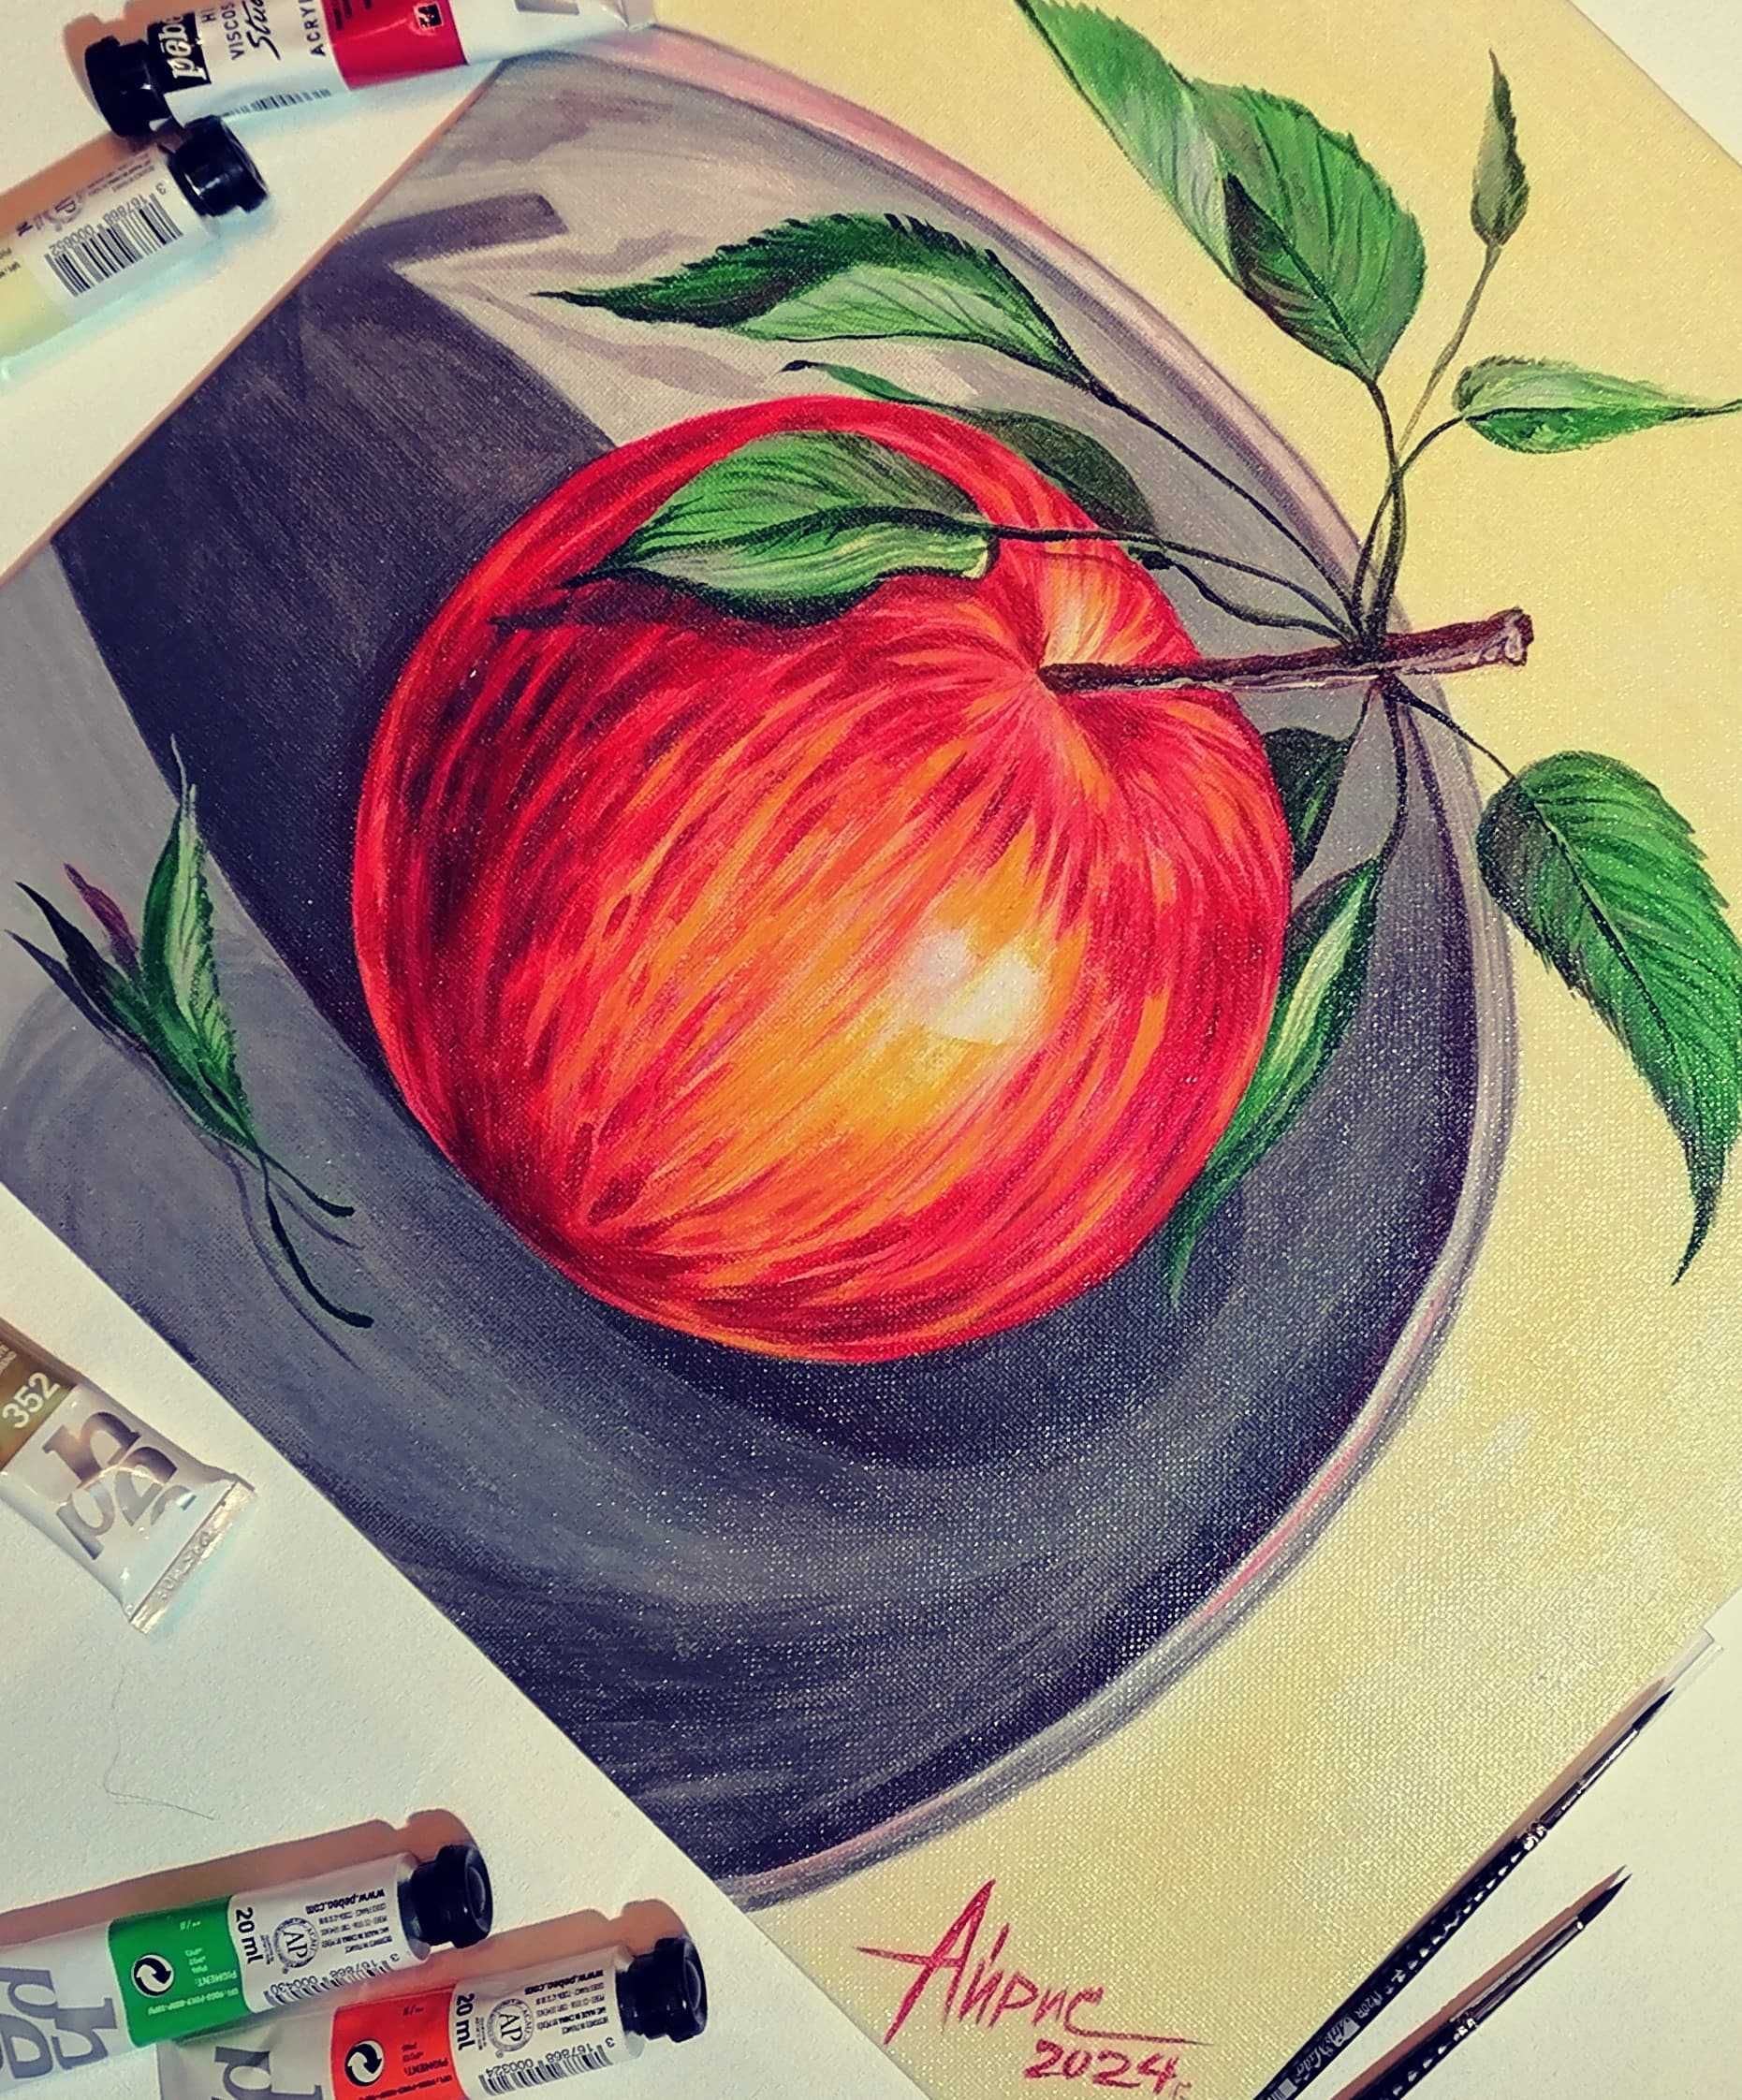 Арт картина "Яблоко"